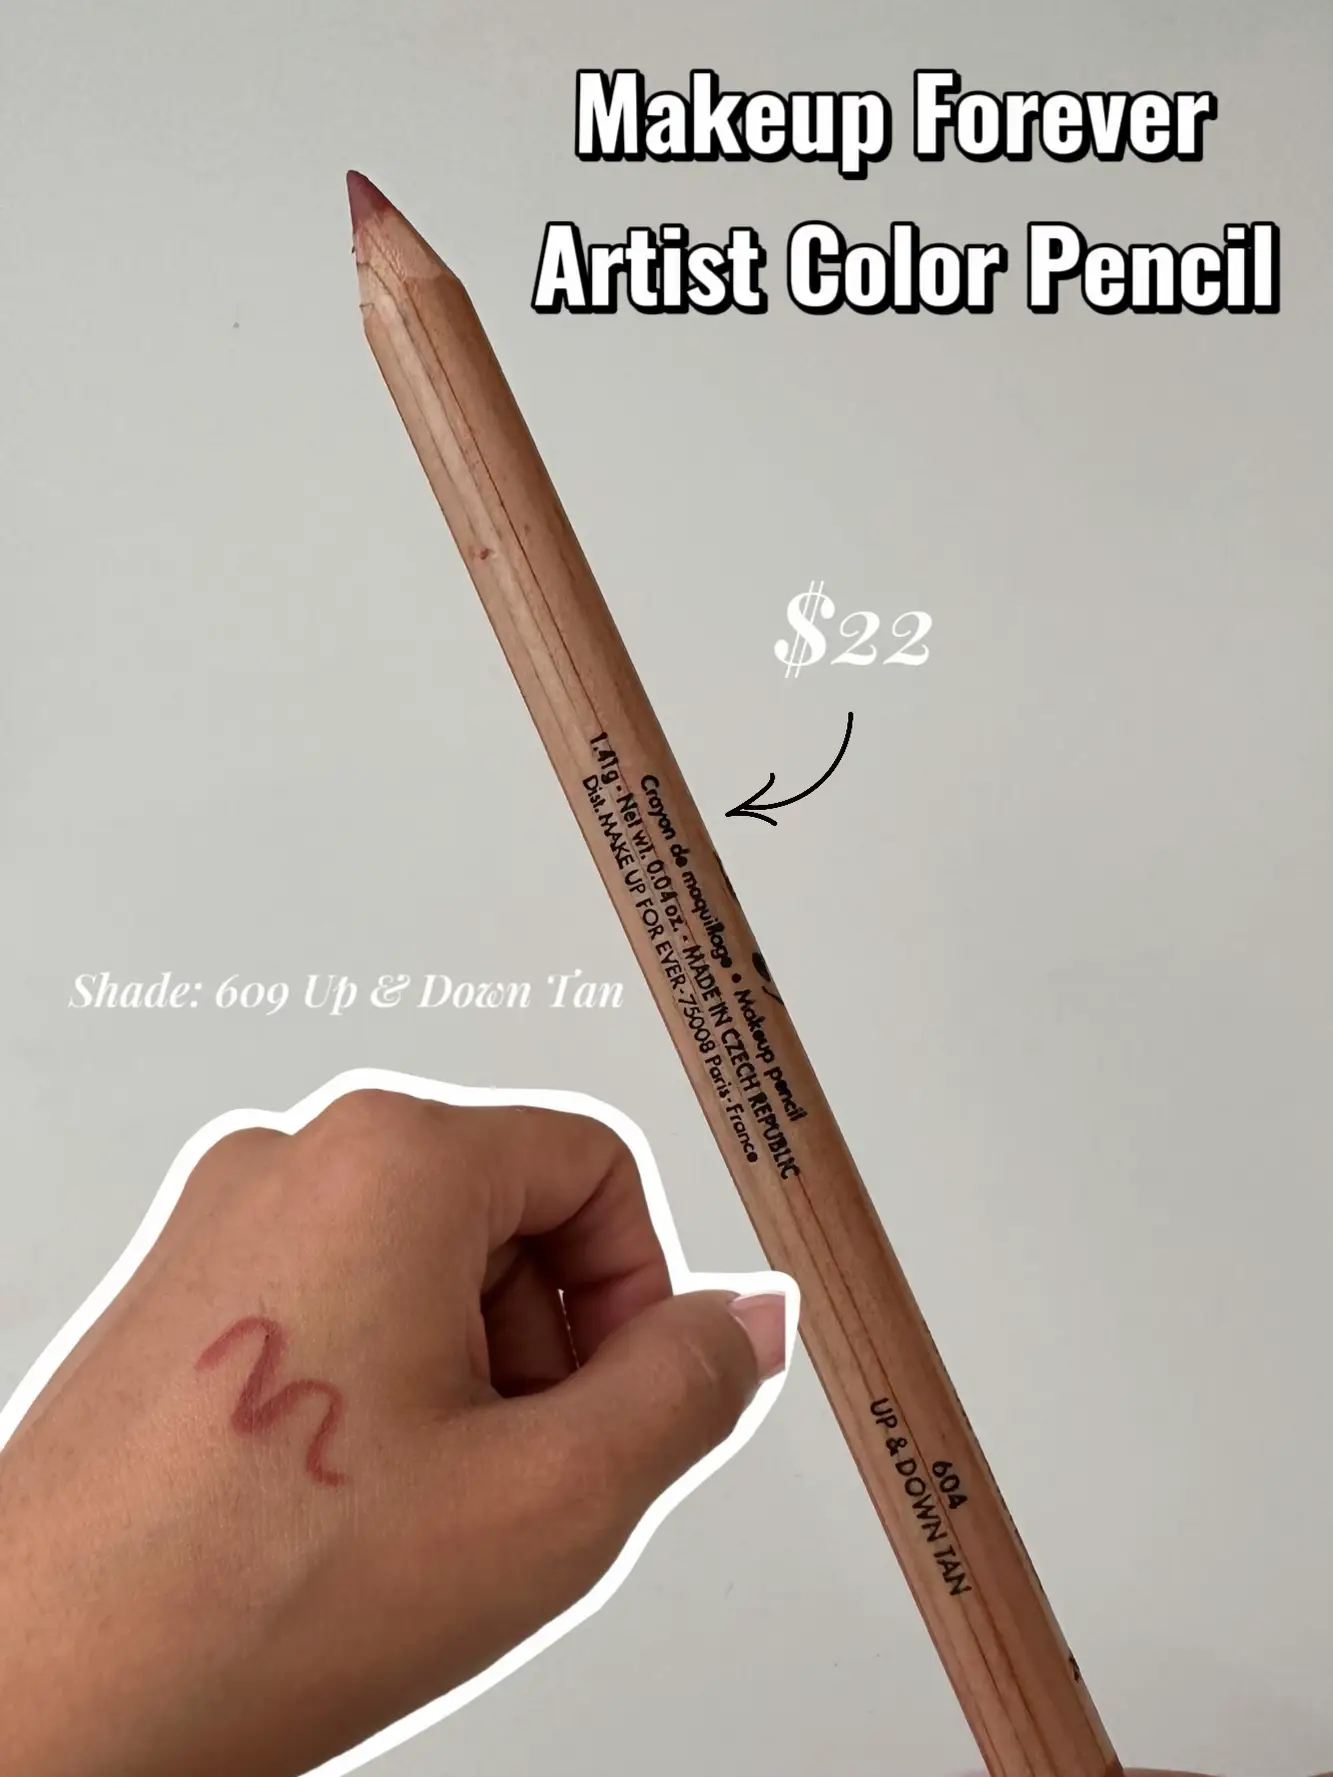 Artist Color Pencil by MAKE UP FOR EVER, Color, Lip, Lip Liner